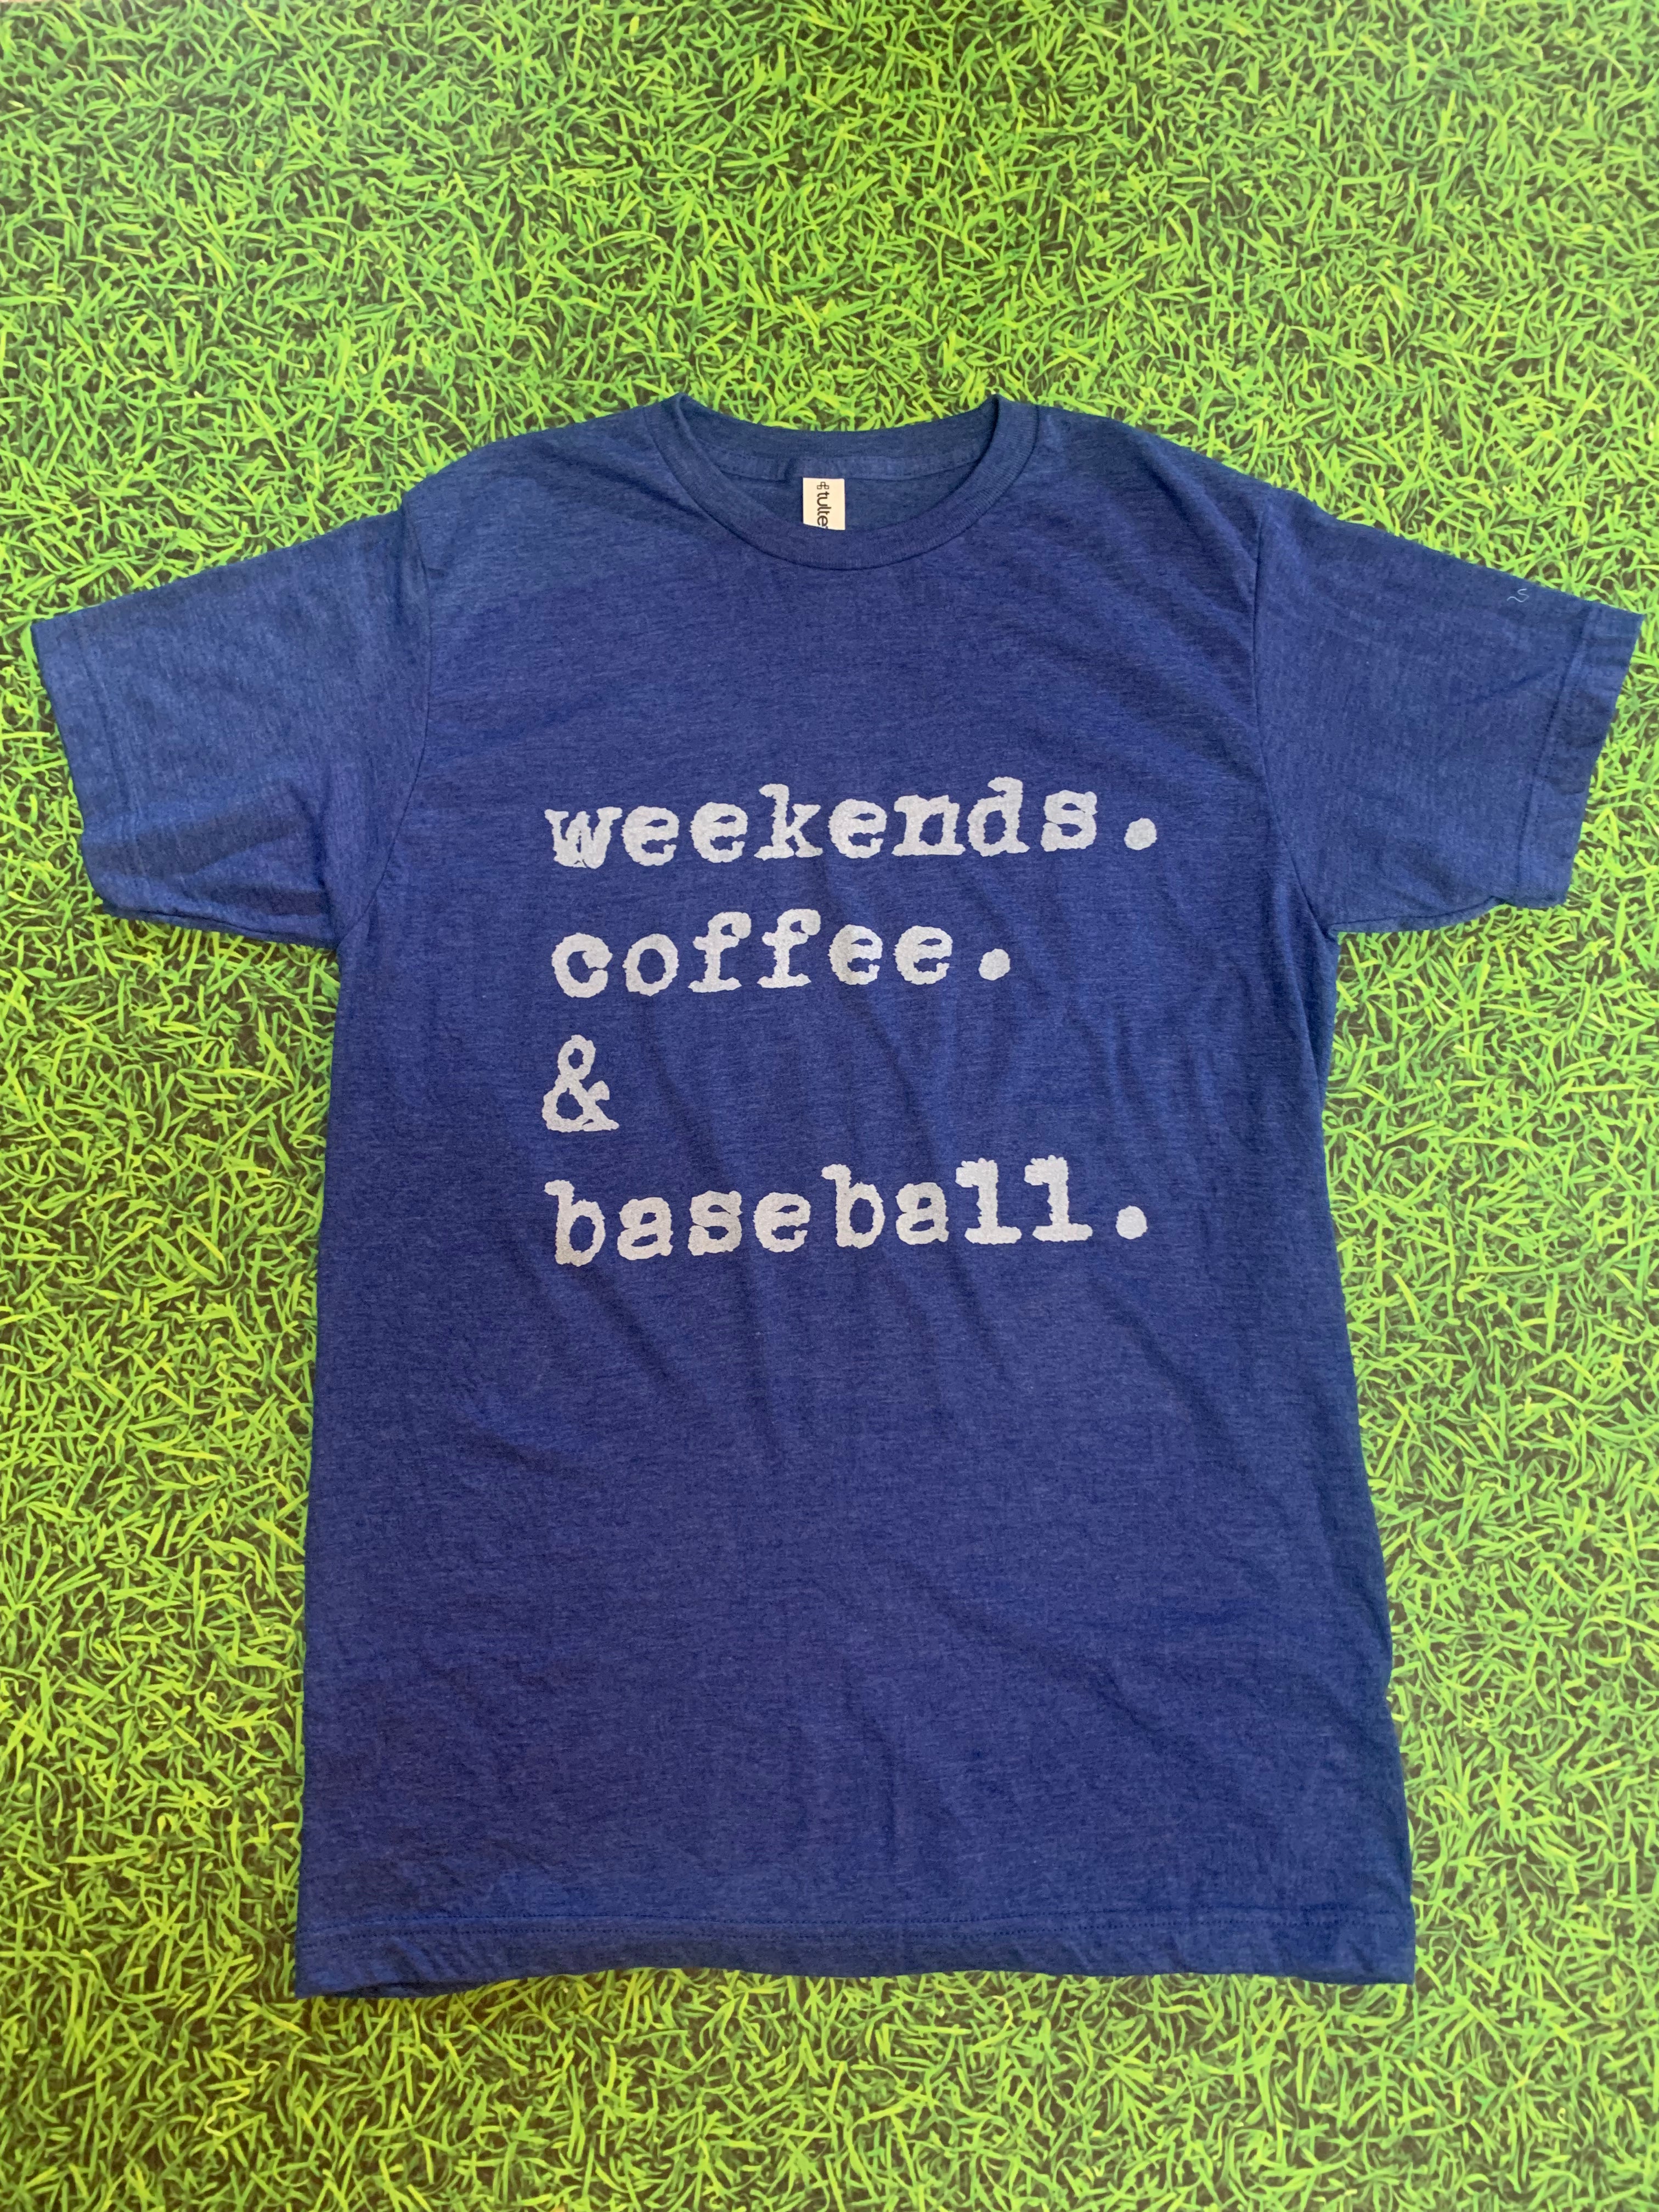 Weekends. Coffee. Baseball. Adult Tee